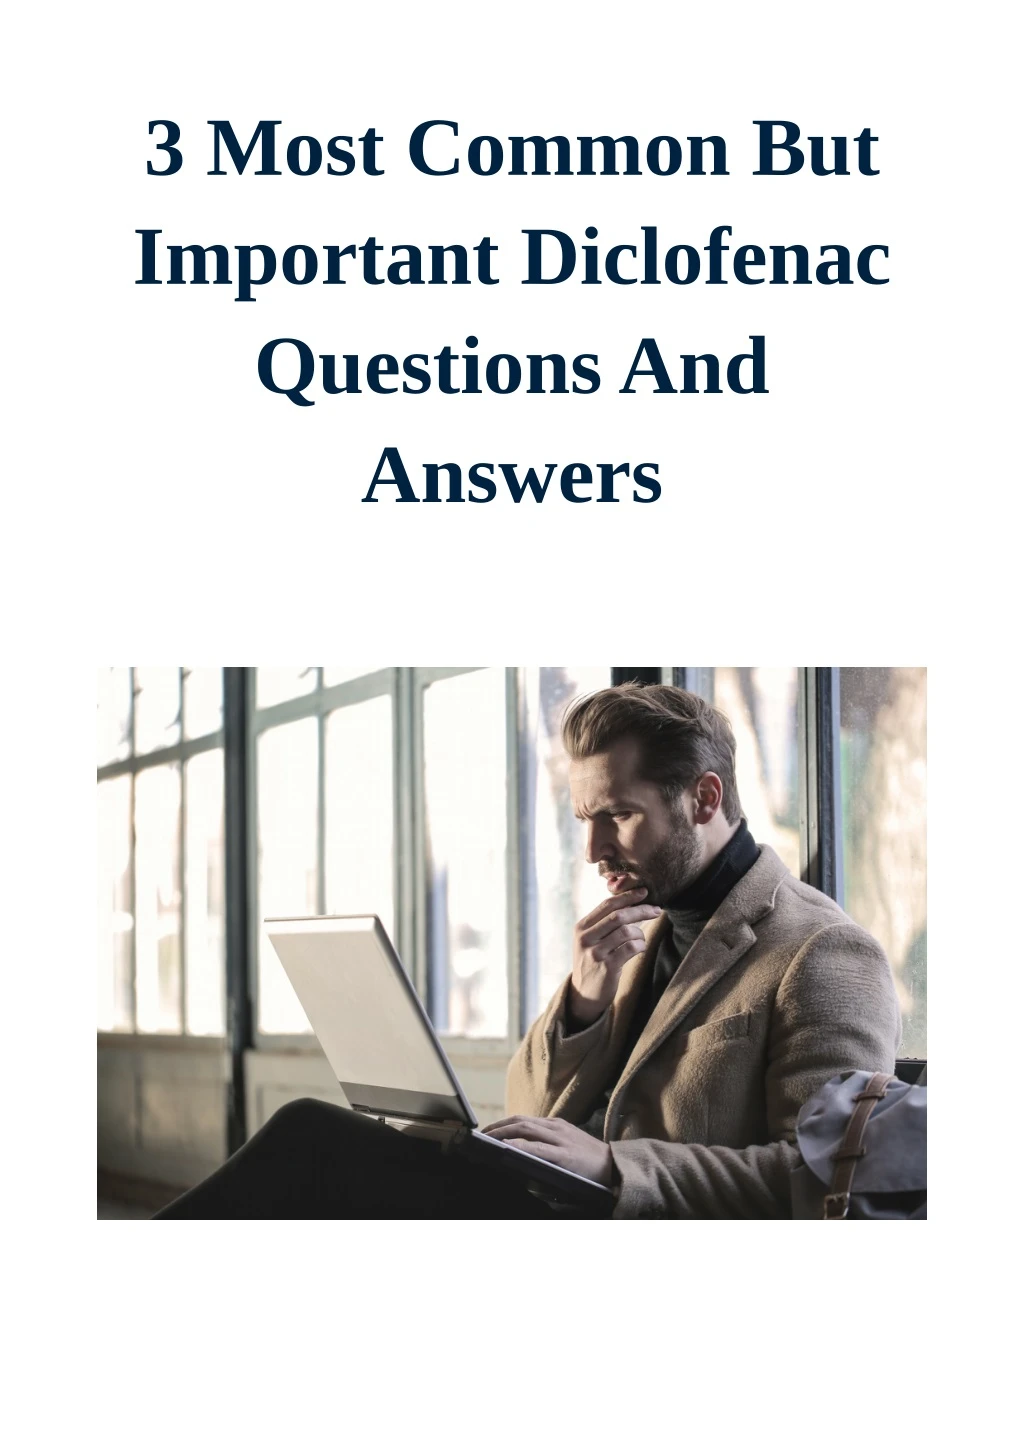 3 most common but important diclofenac questions